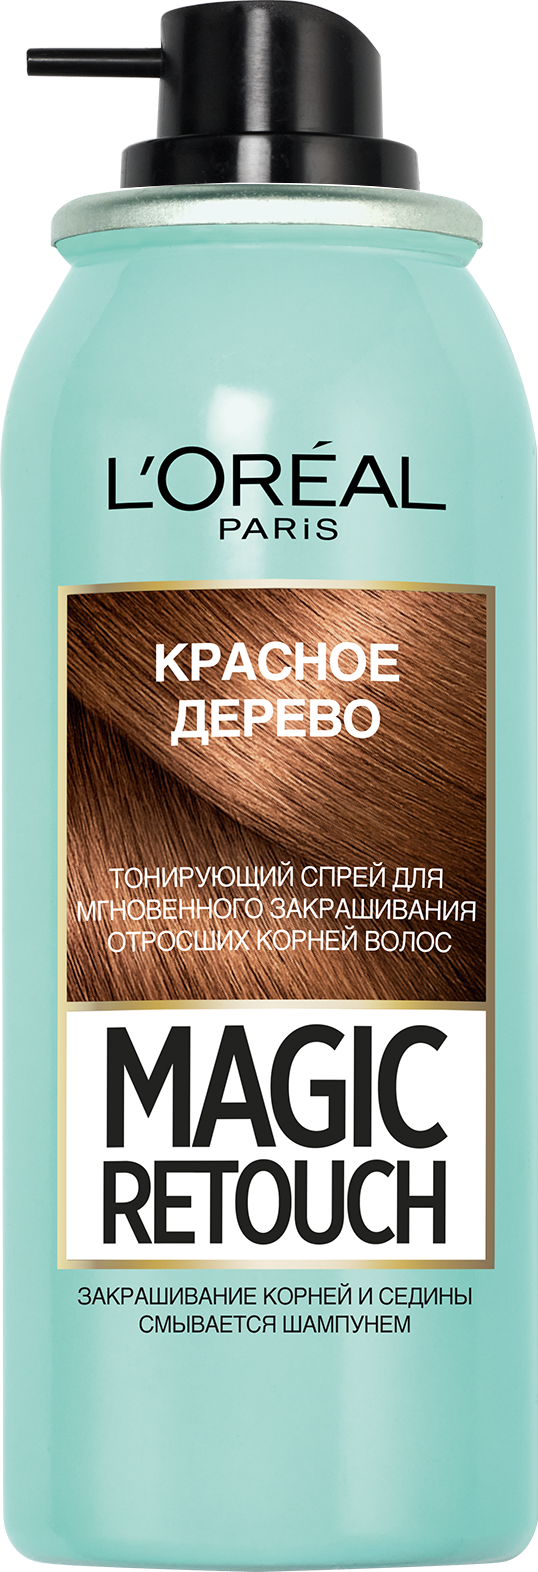 Тонирующий спрей для волос L'Oreal Paris Magic Retouch, тон 06 (красное дерево), 75 мл - фото 3